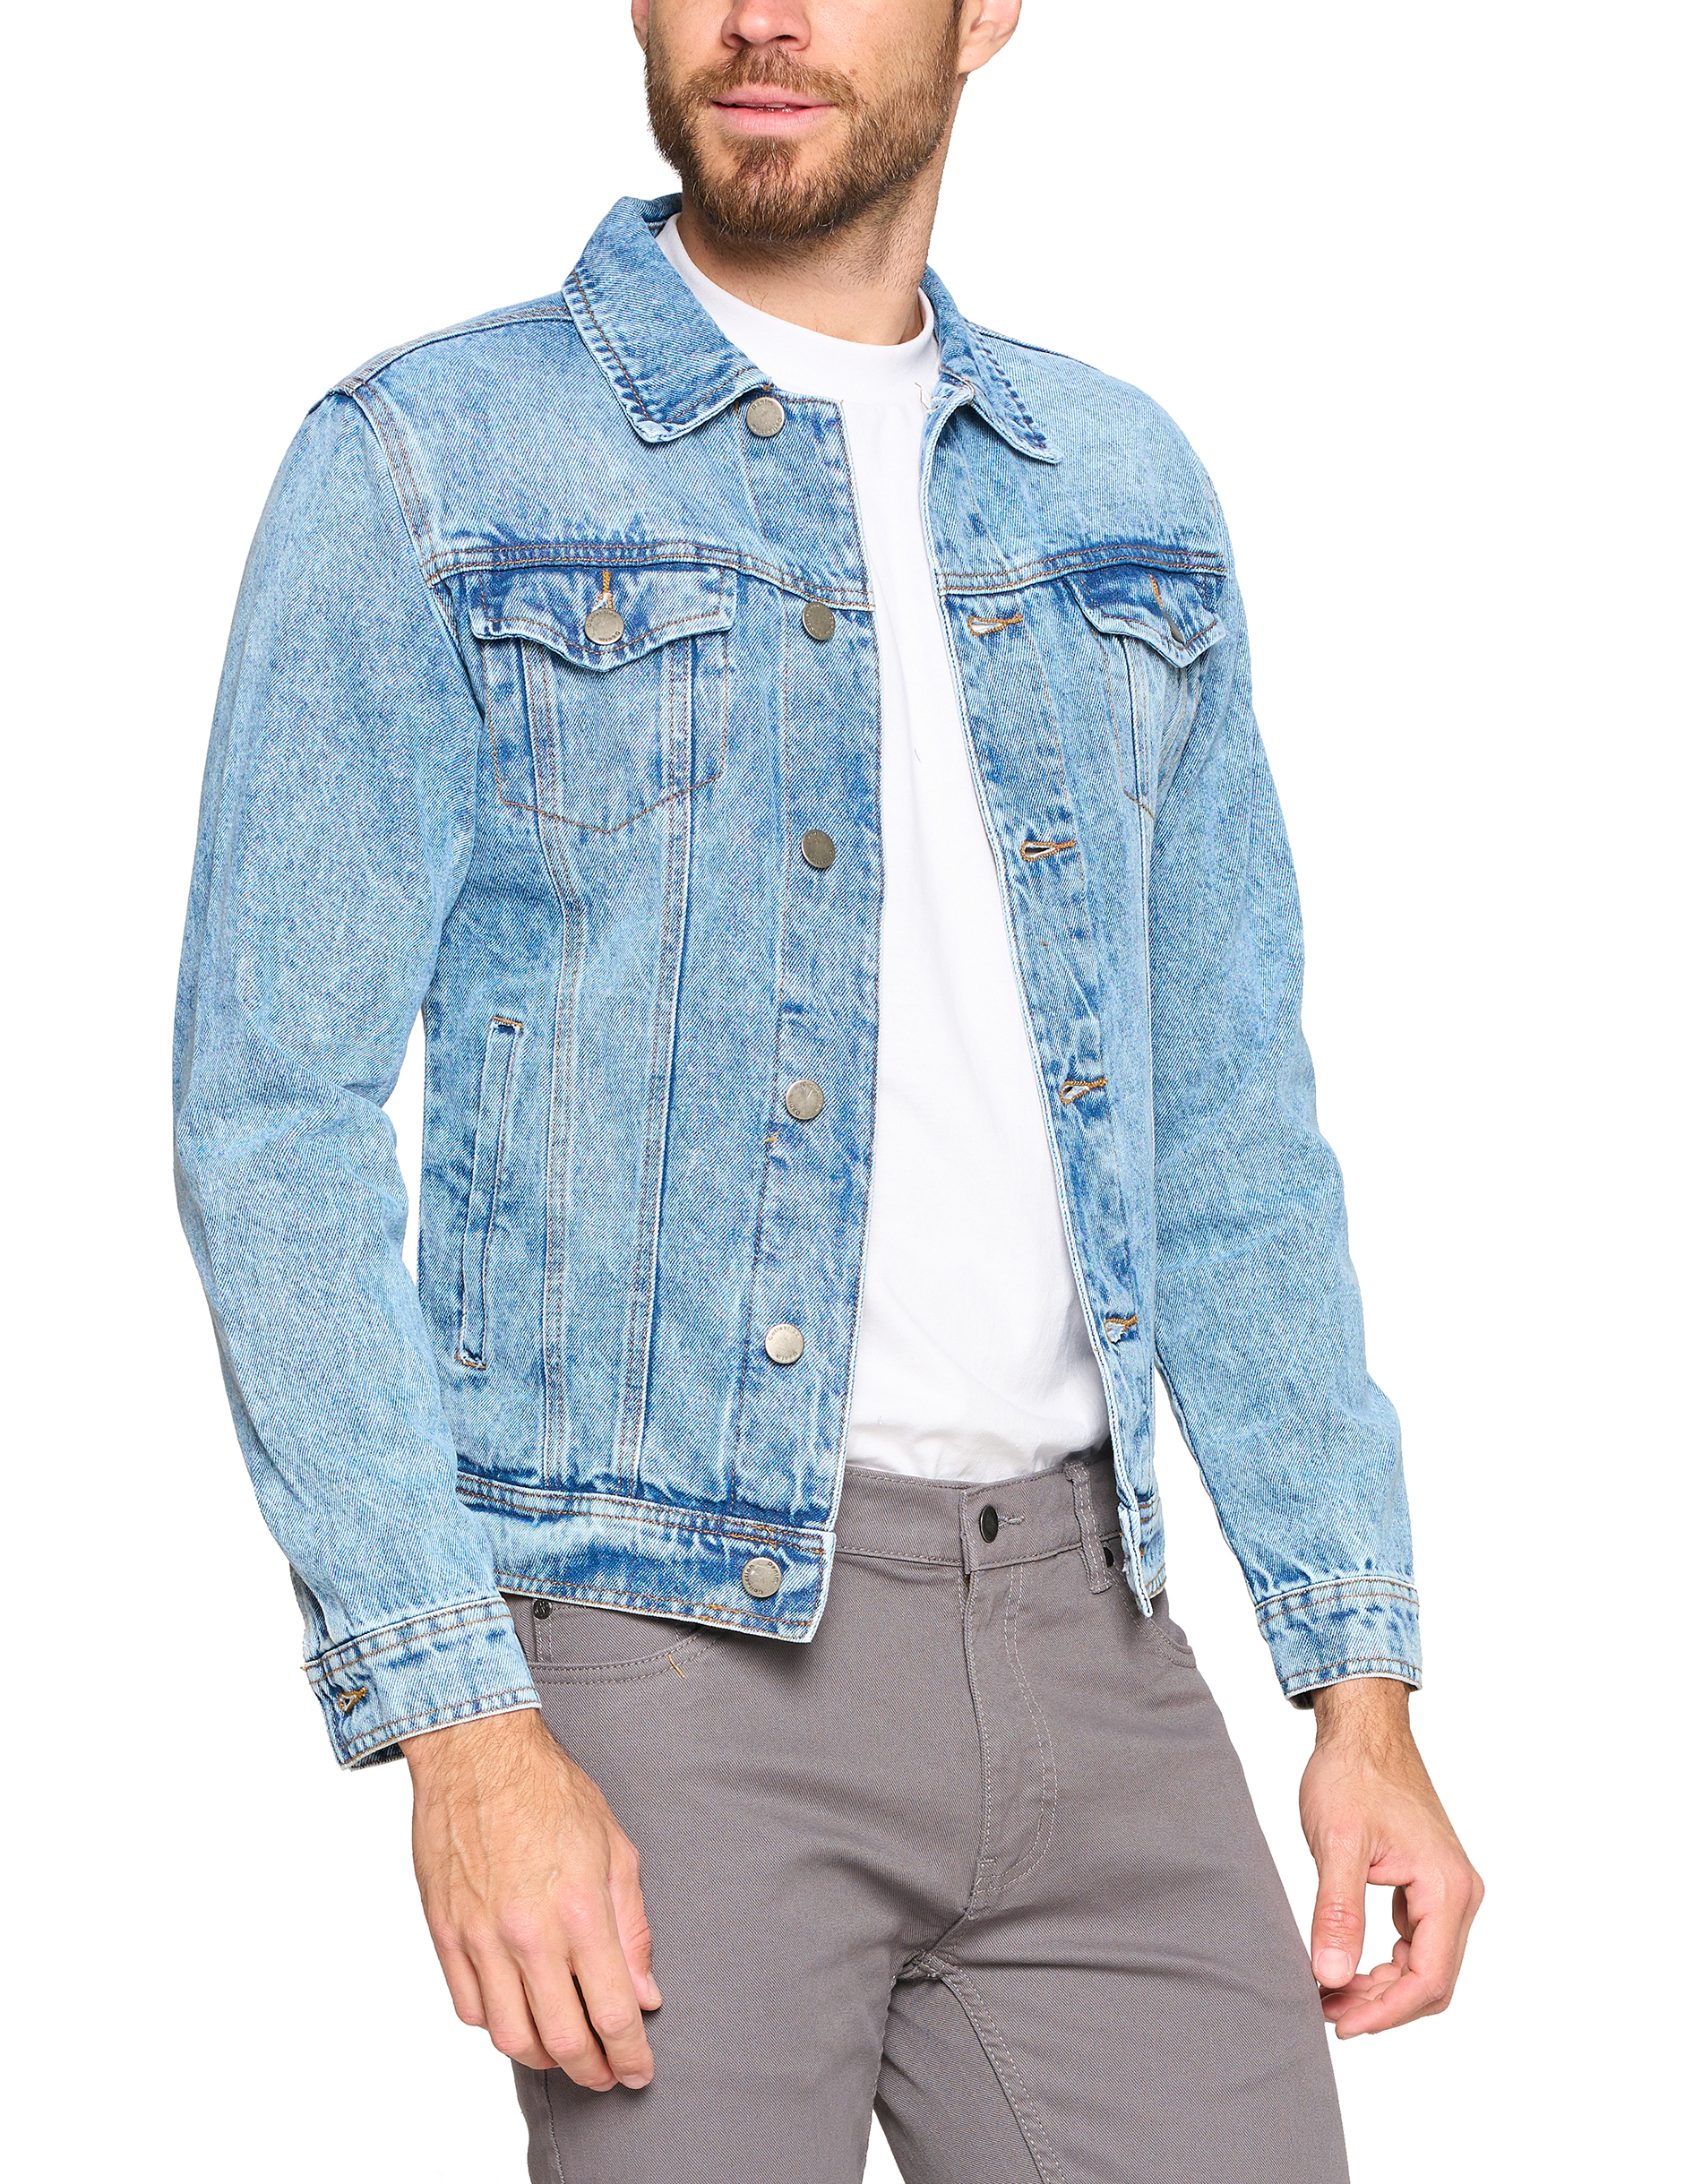 Red Label Men’s Premium Casual Faded Denim Jean Button Up Cotton Slim Fit Jacket (Light Blue, L) - image 3 of 7